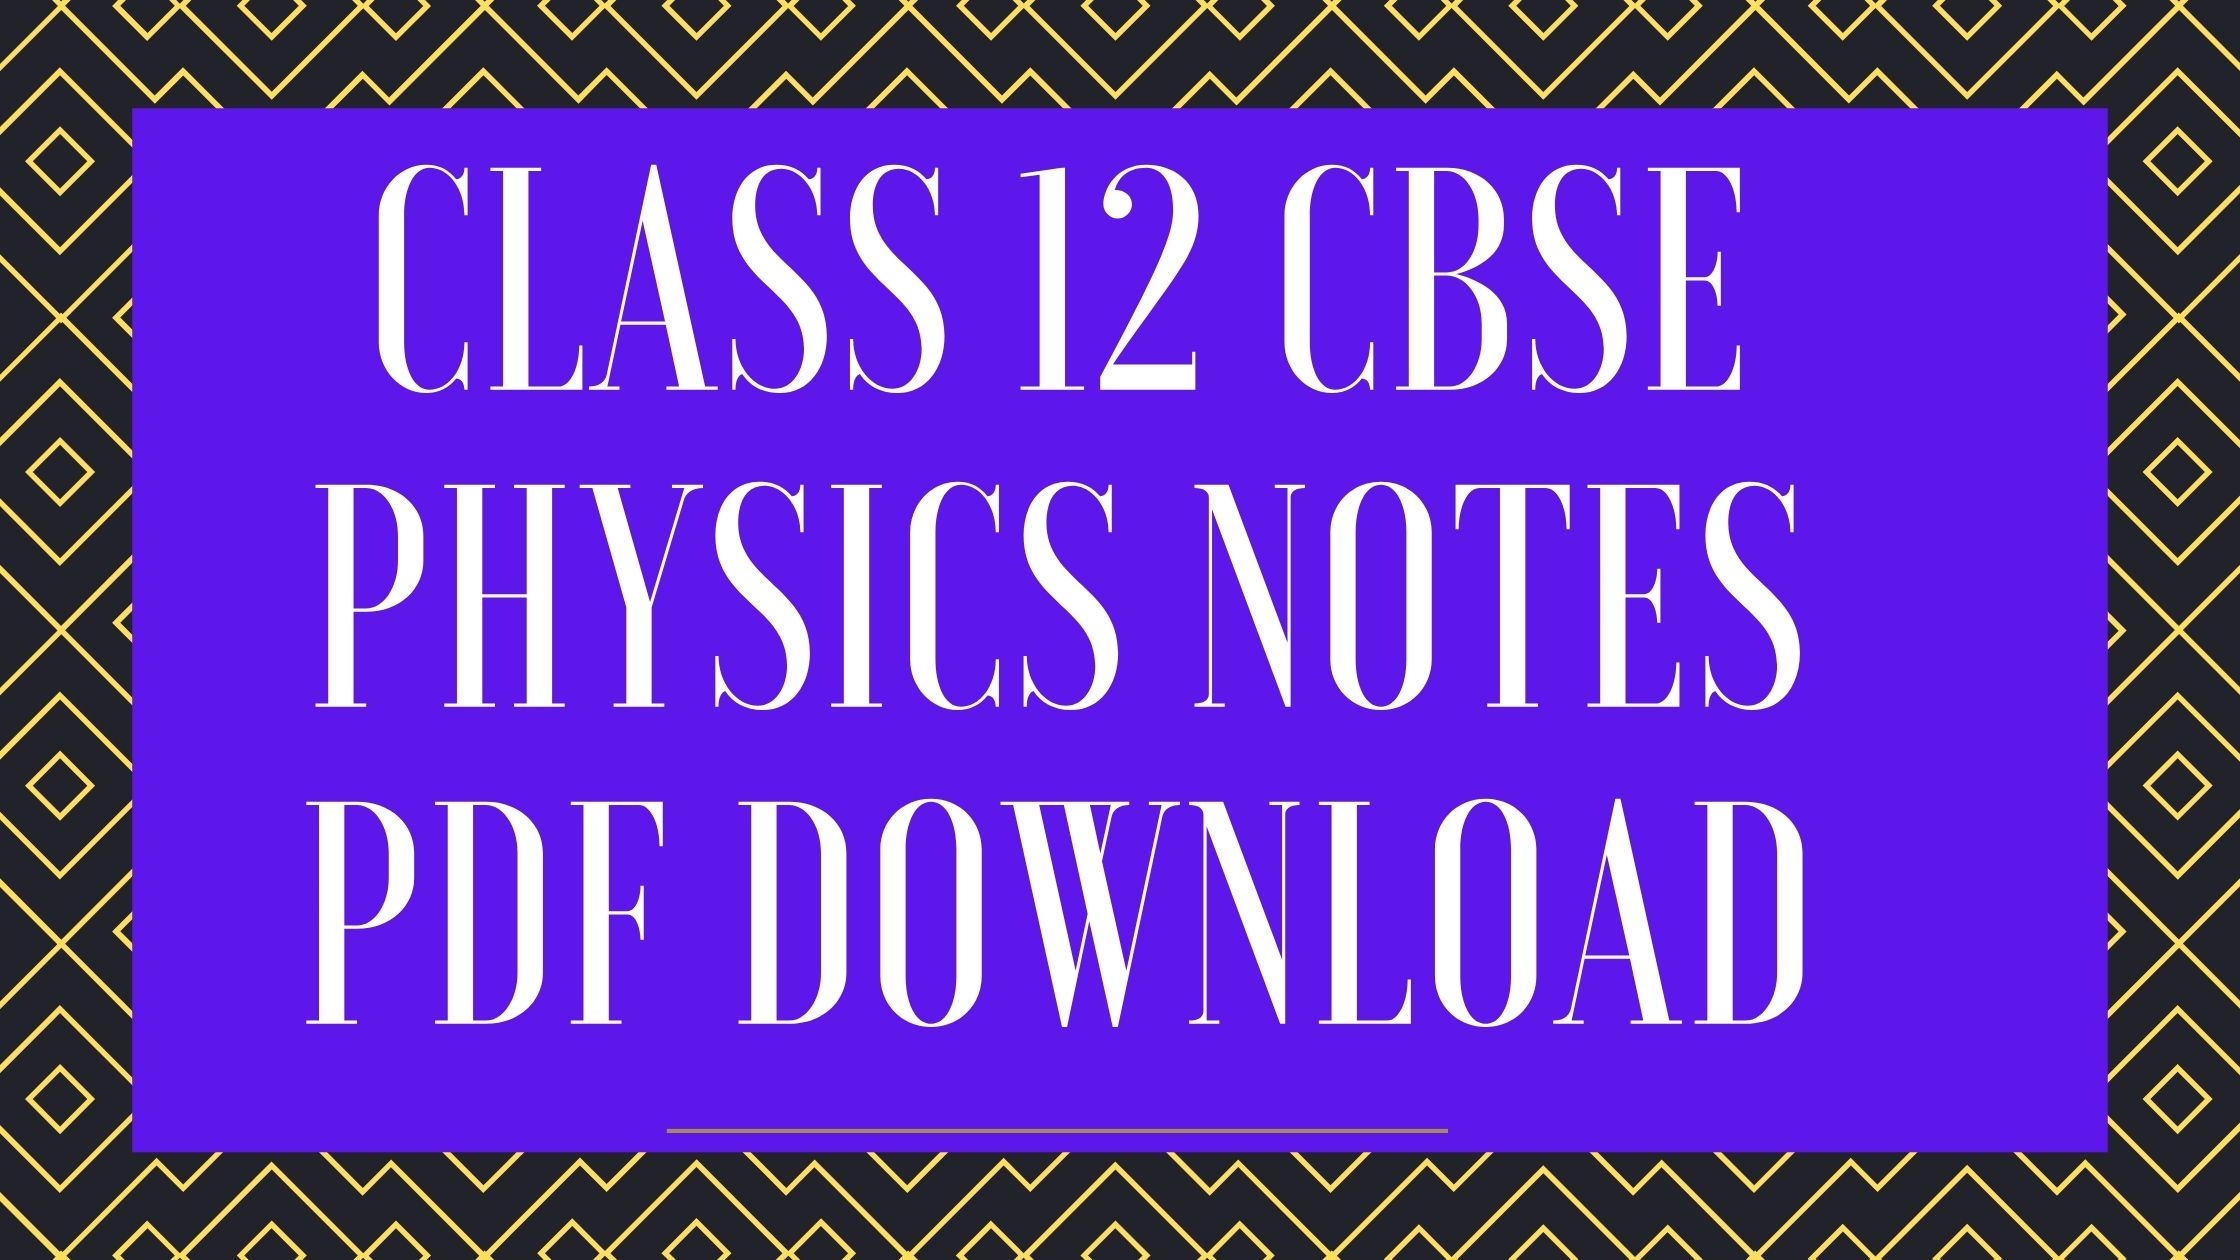 Class 12 Physics Handwritten Notes Pdf